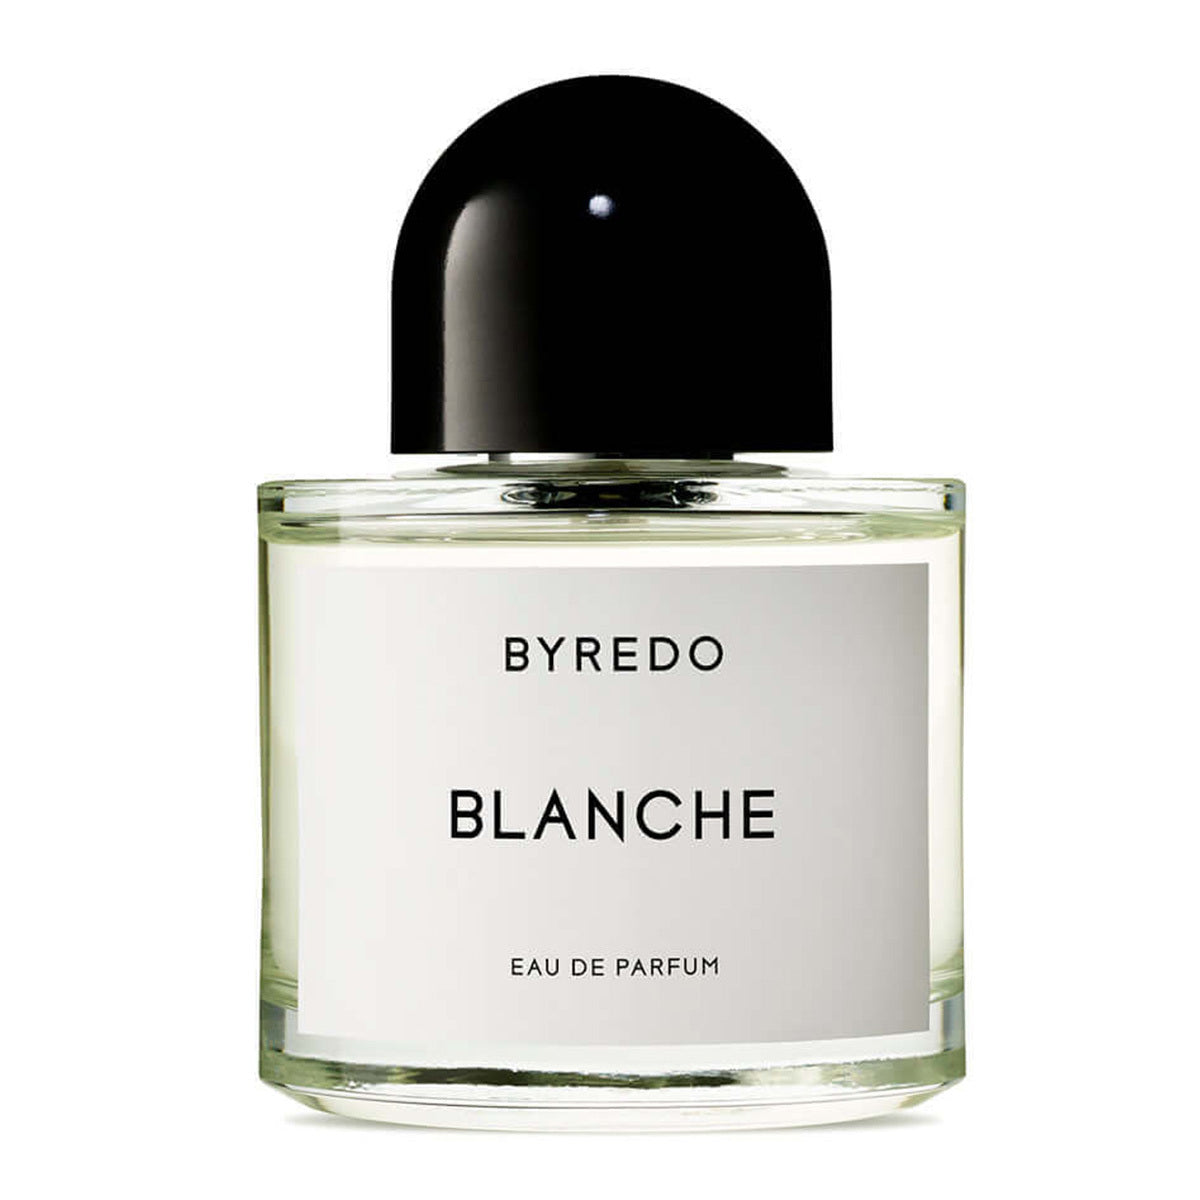 Primary image of Blanche Eau de Parfum